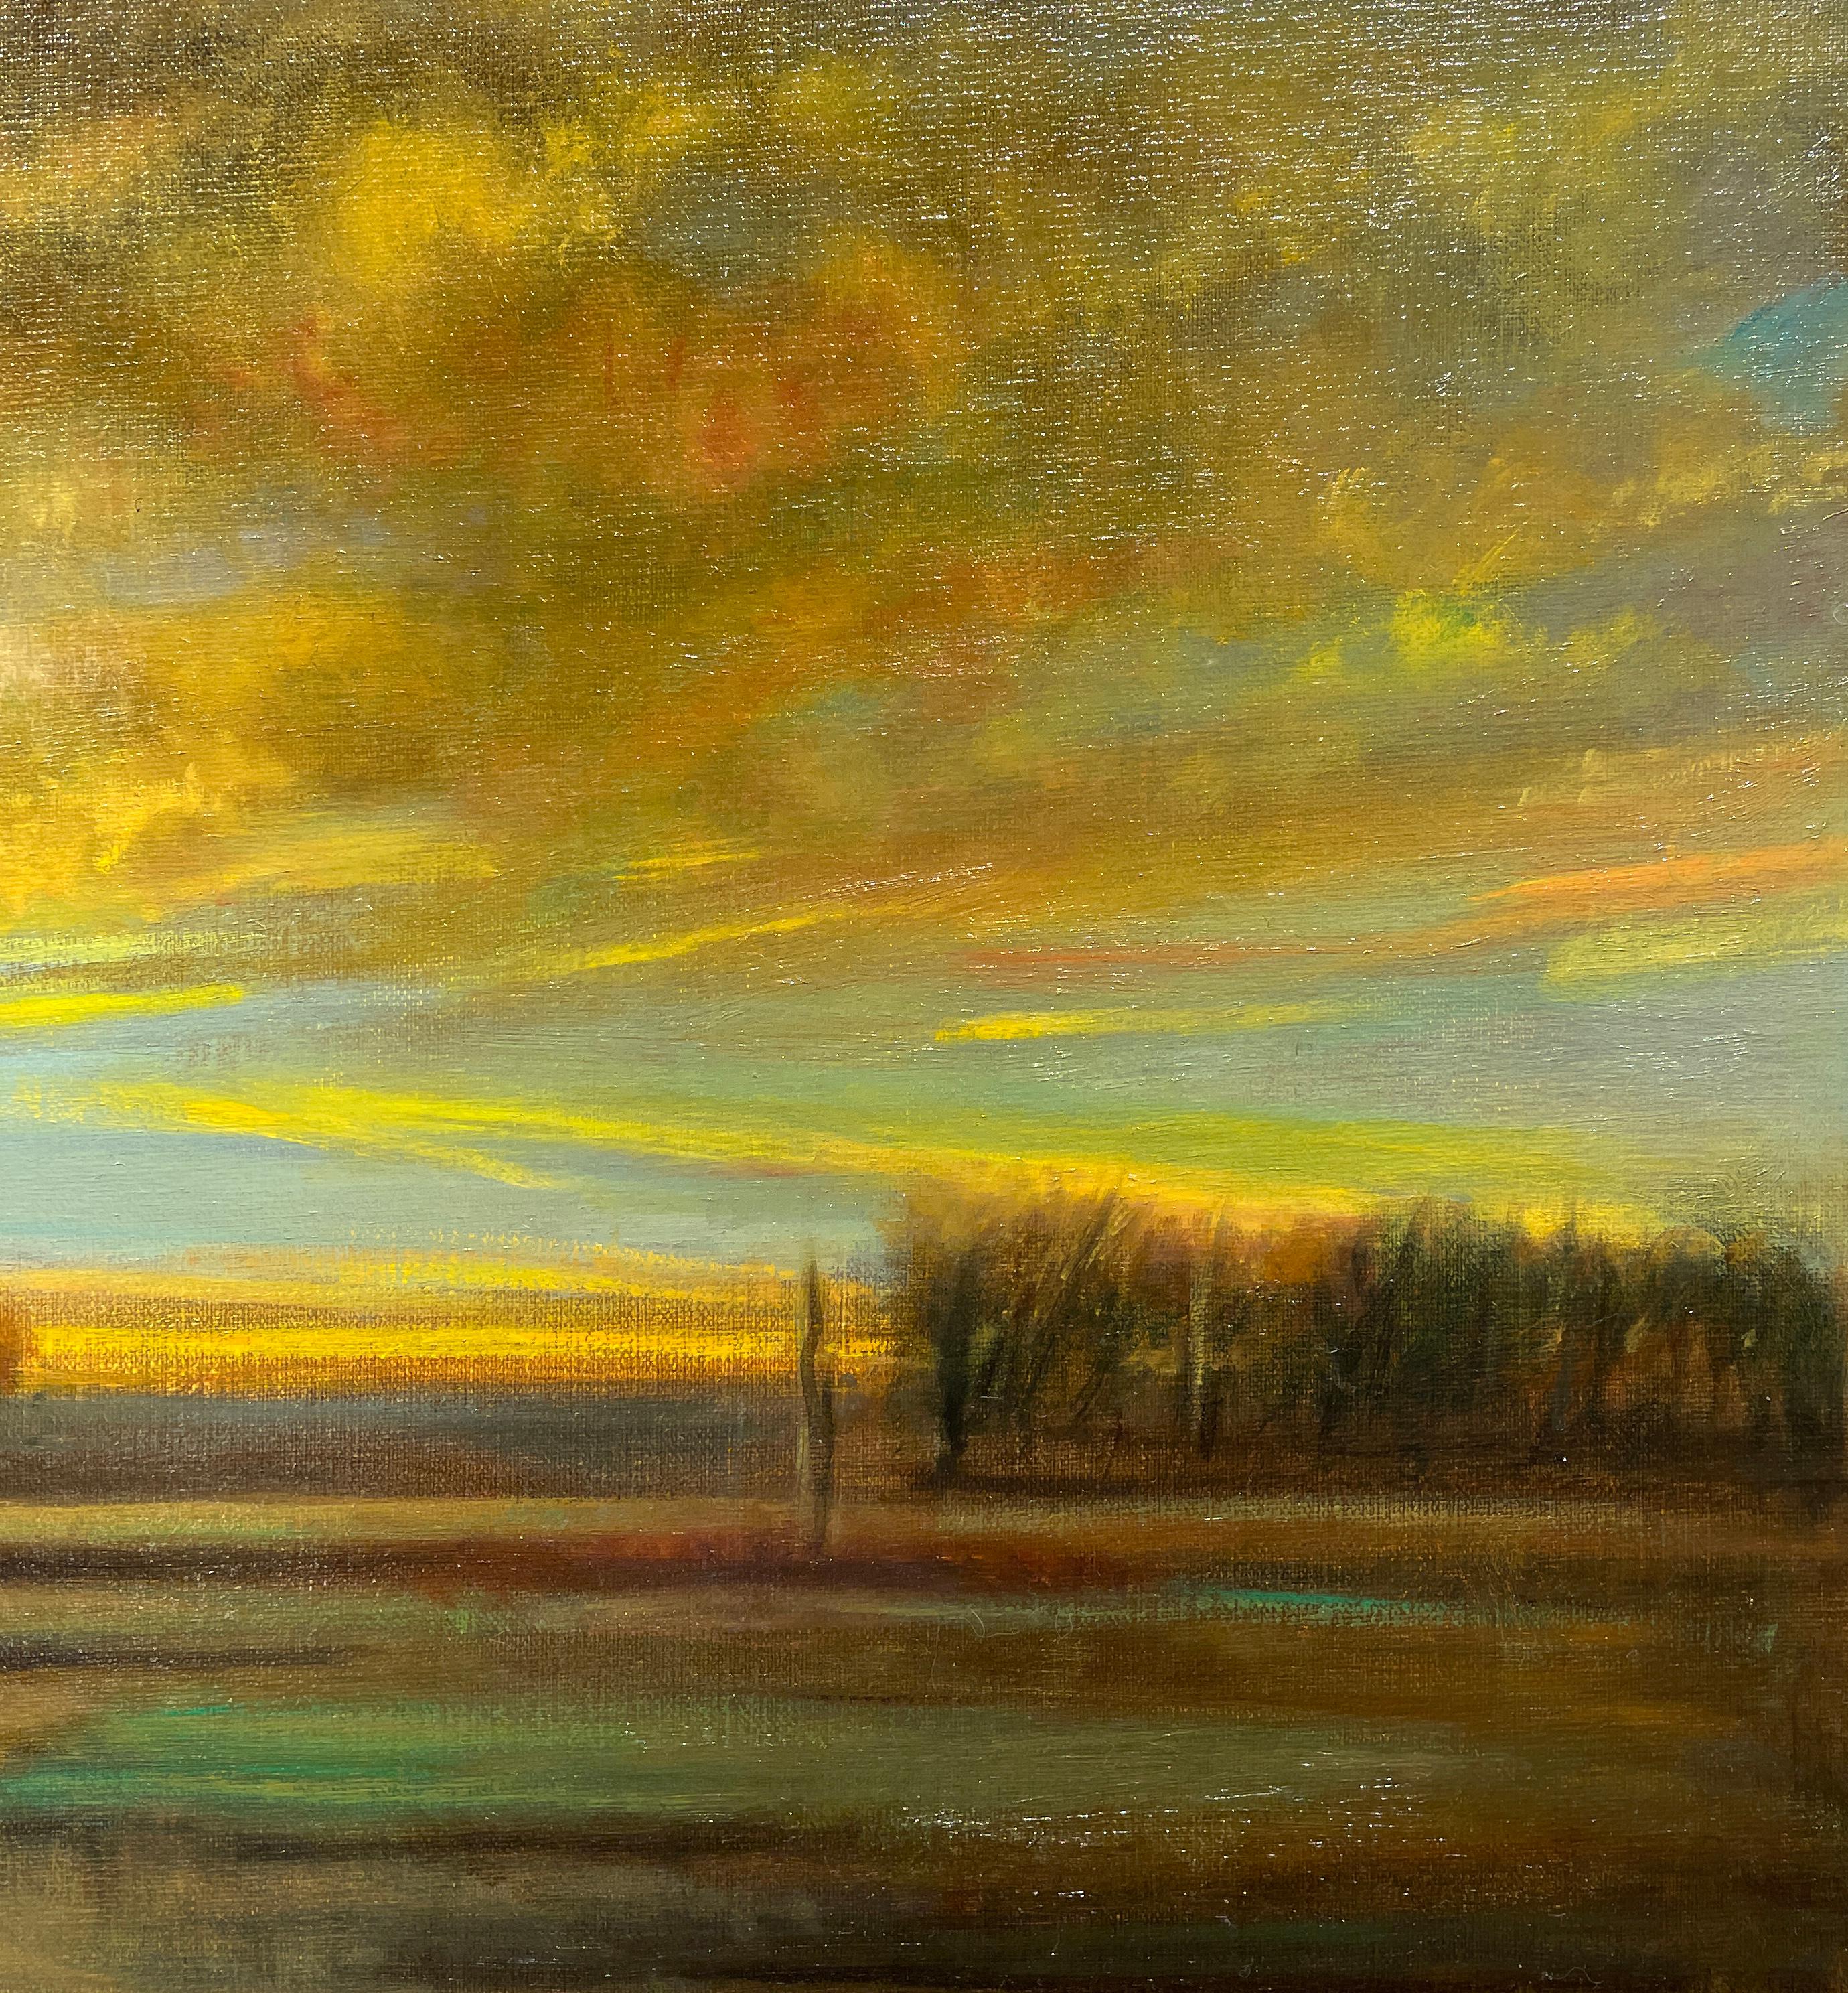 Sunburst, Rising Sun - Reflective Golden Clouds, Marshy Landscape, Original Oil  - Brown Landscape Painting by Rose Freymuth-Frazier